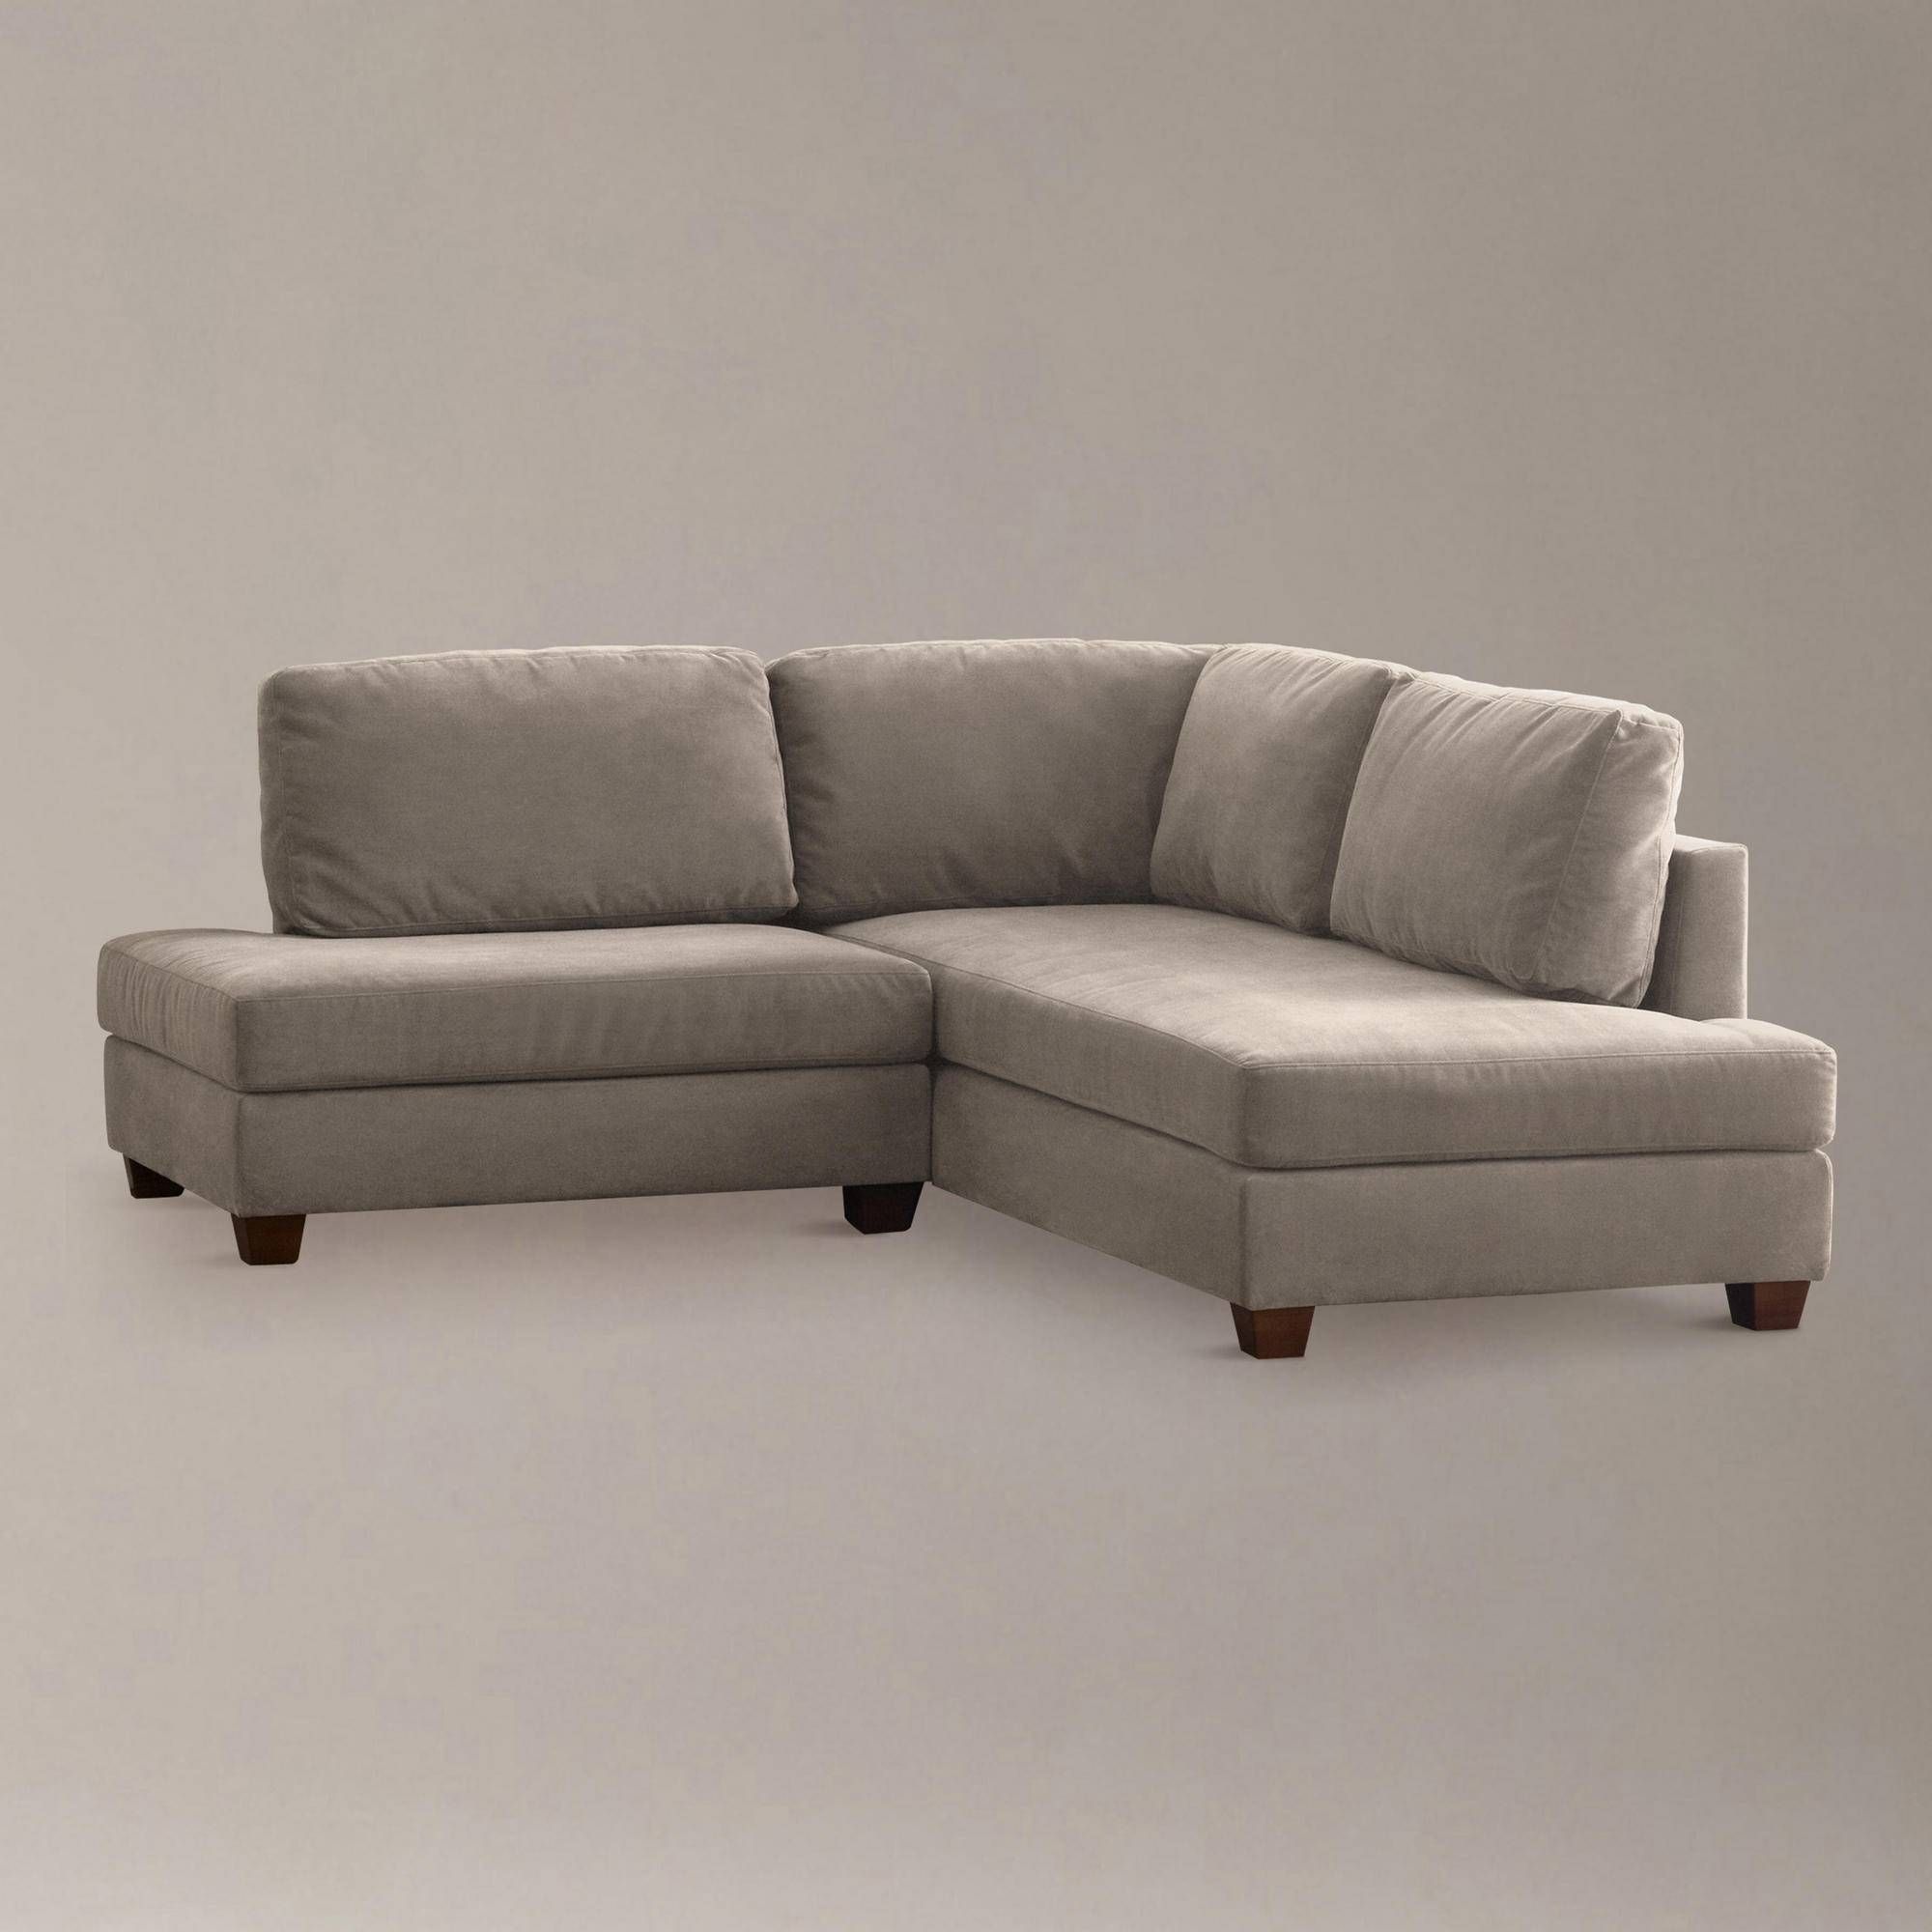 Lovely Small Modular Sectional Sofa